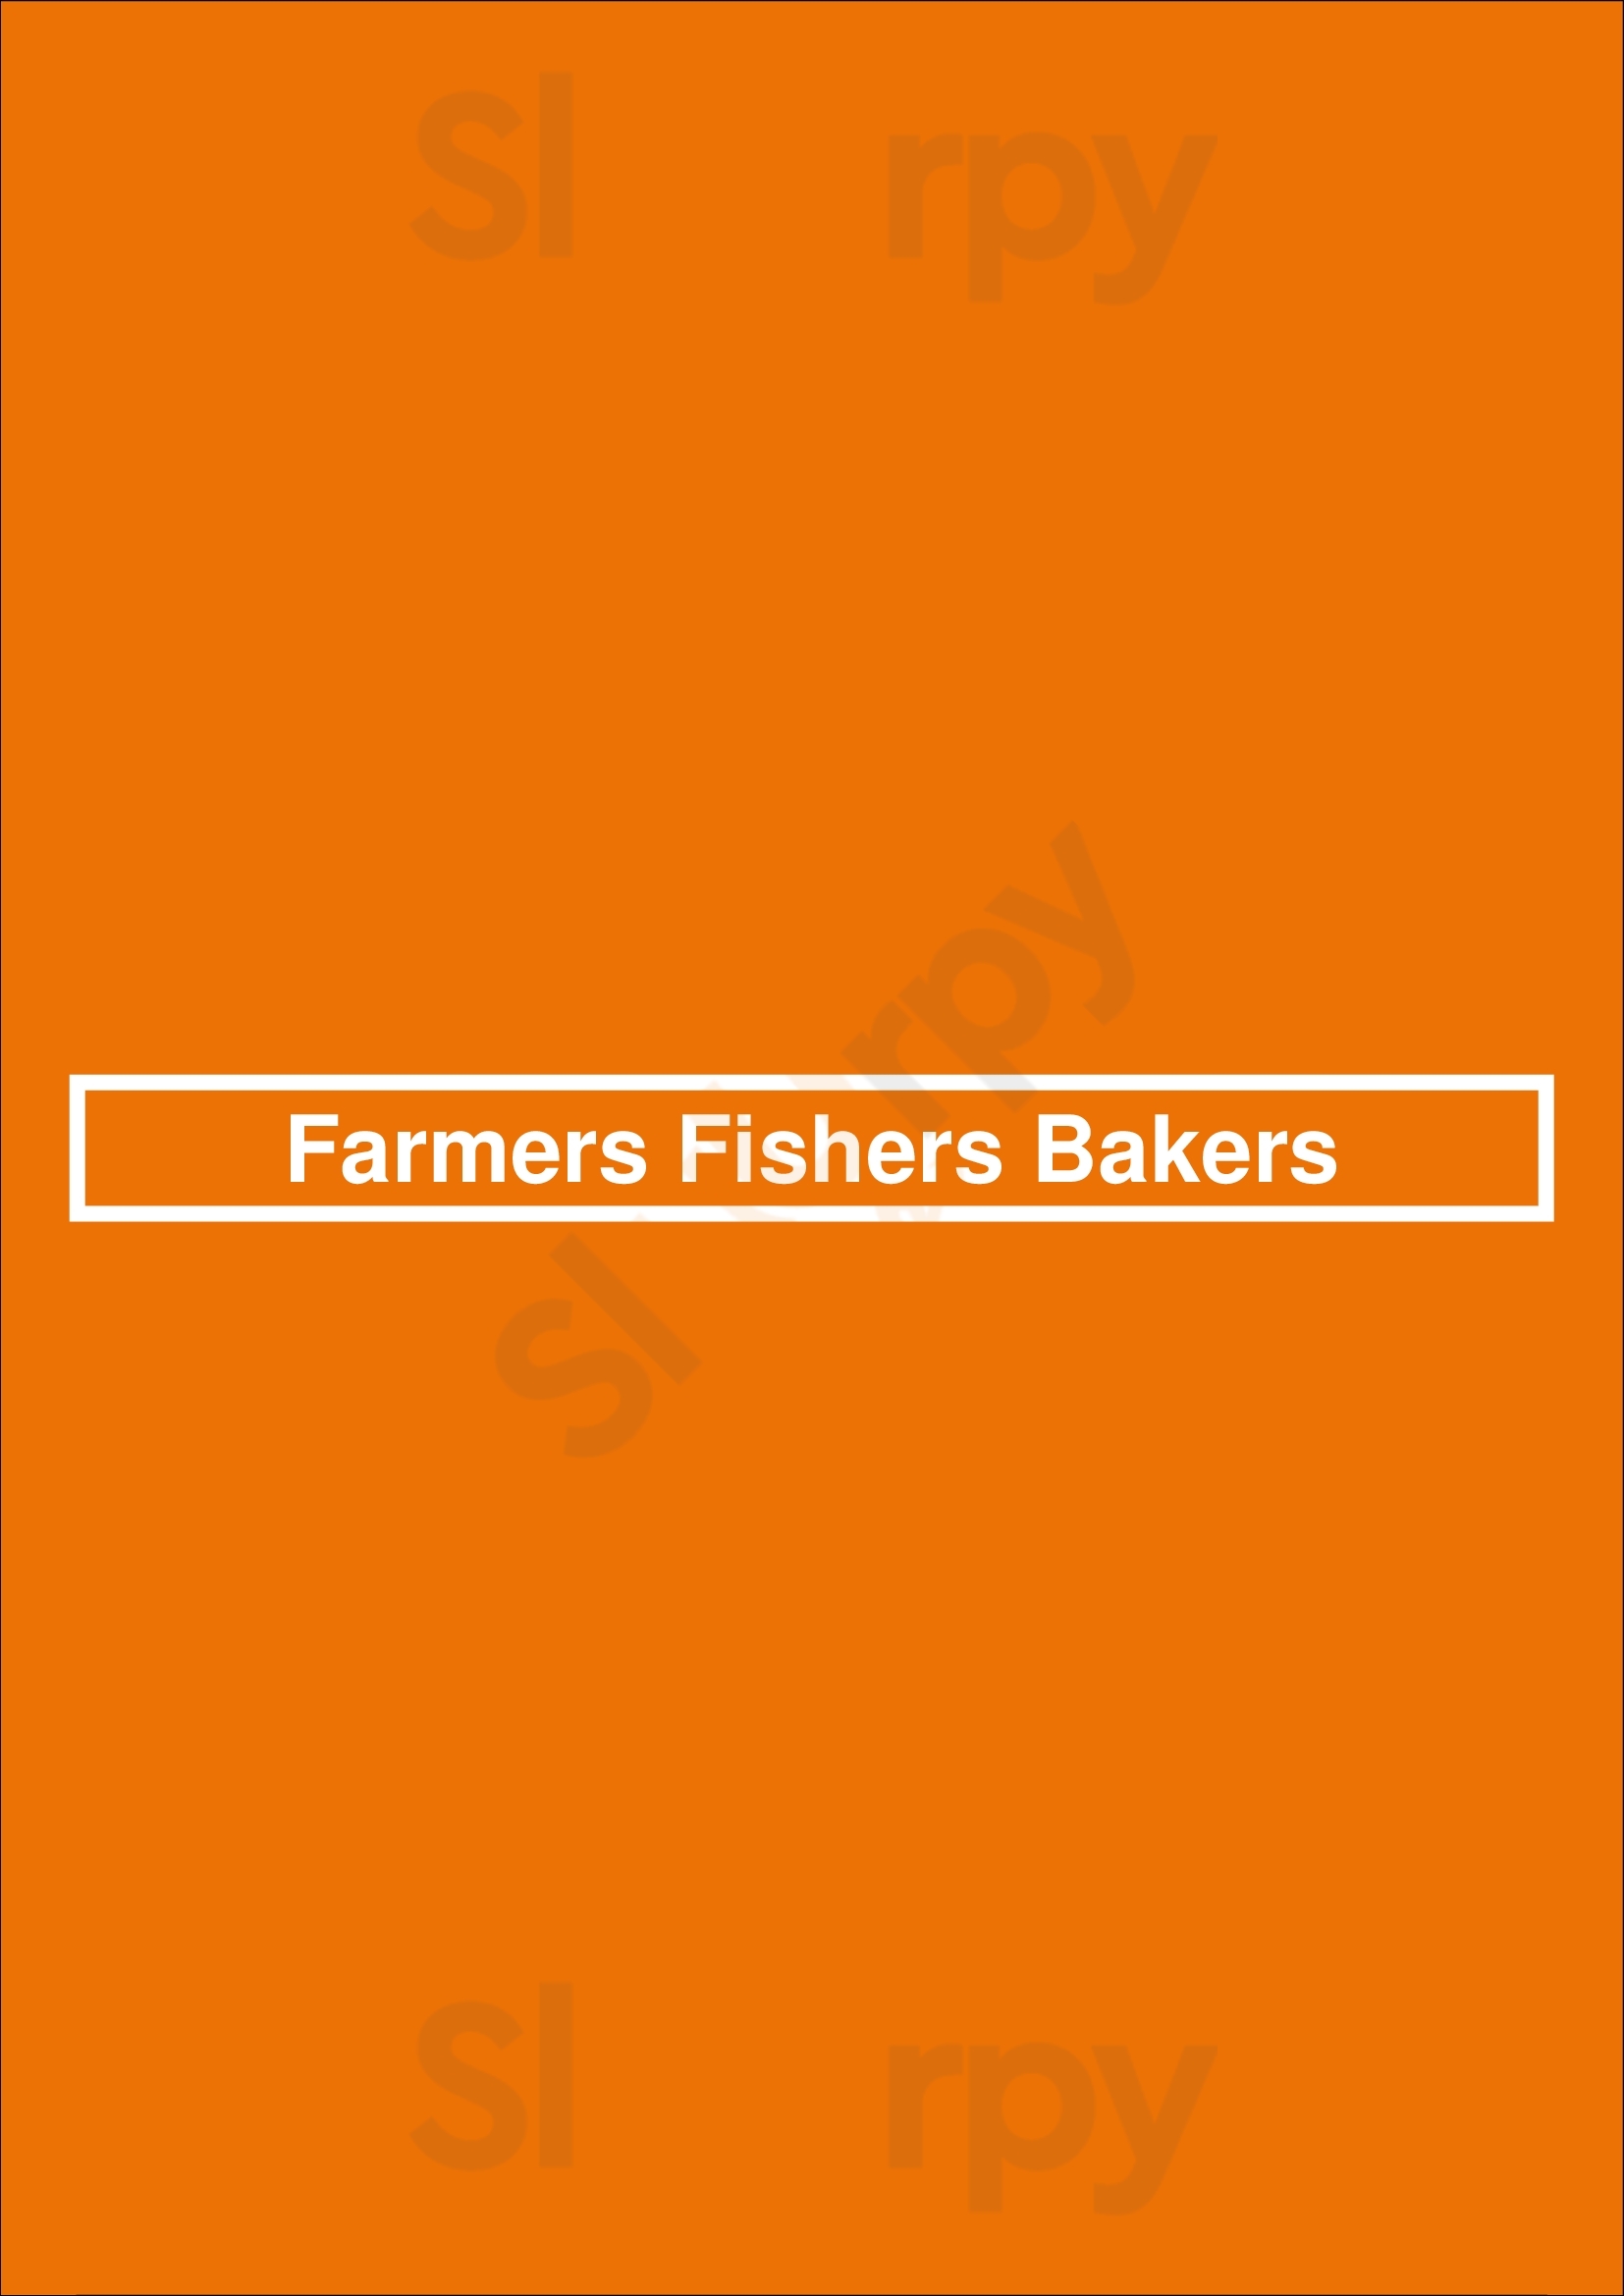 Farmers Fishers Bakers Washington DC Menu - 1